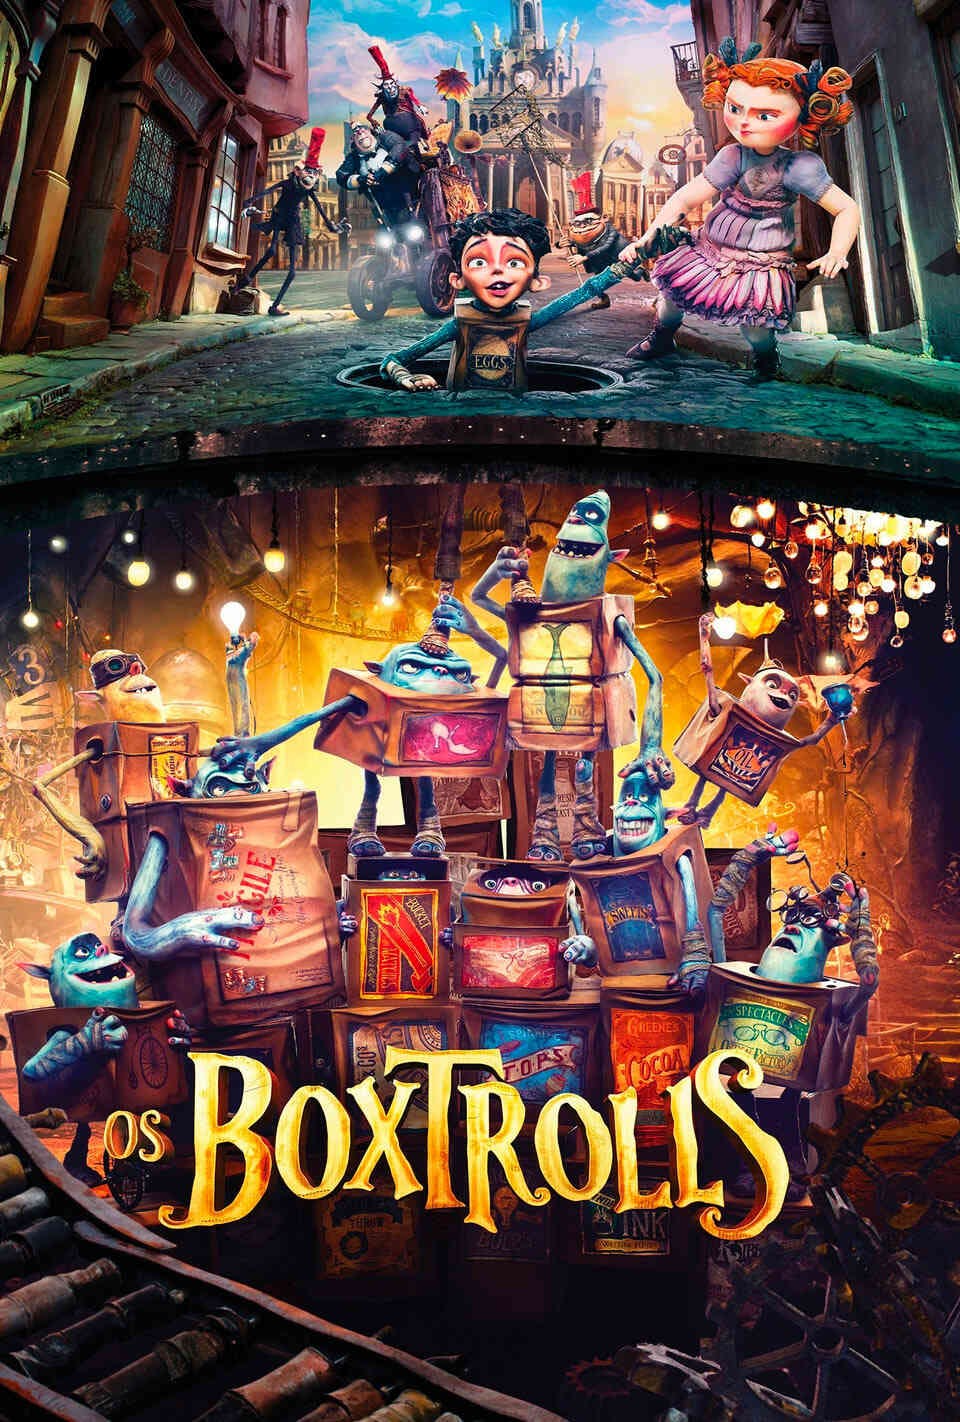 Read The Boxtrolls screenplay (poster)